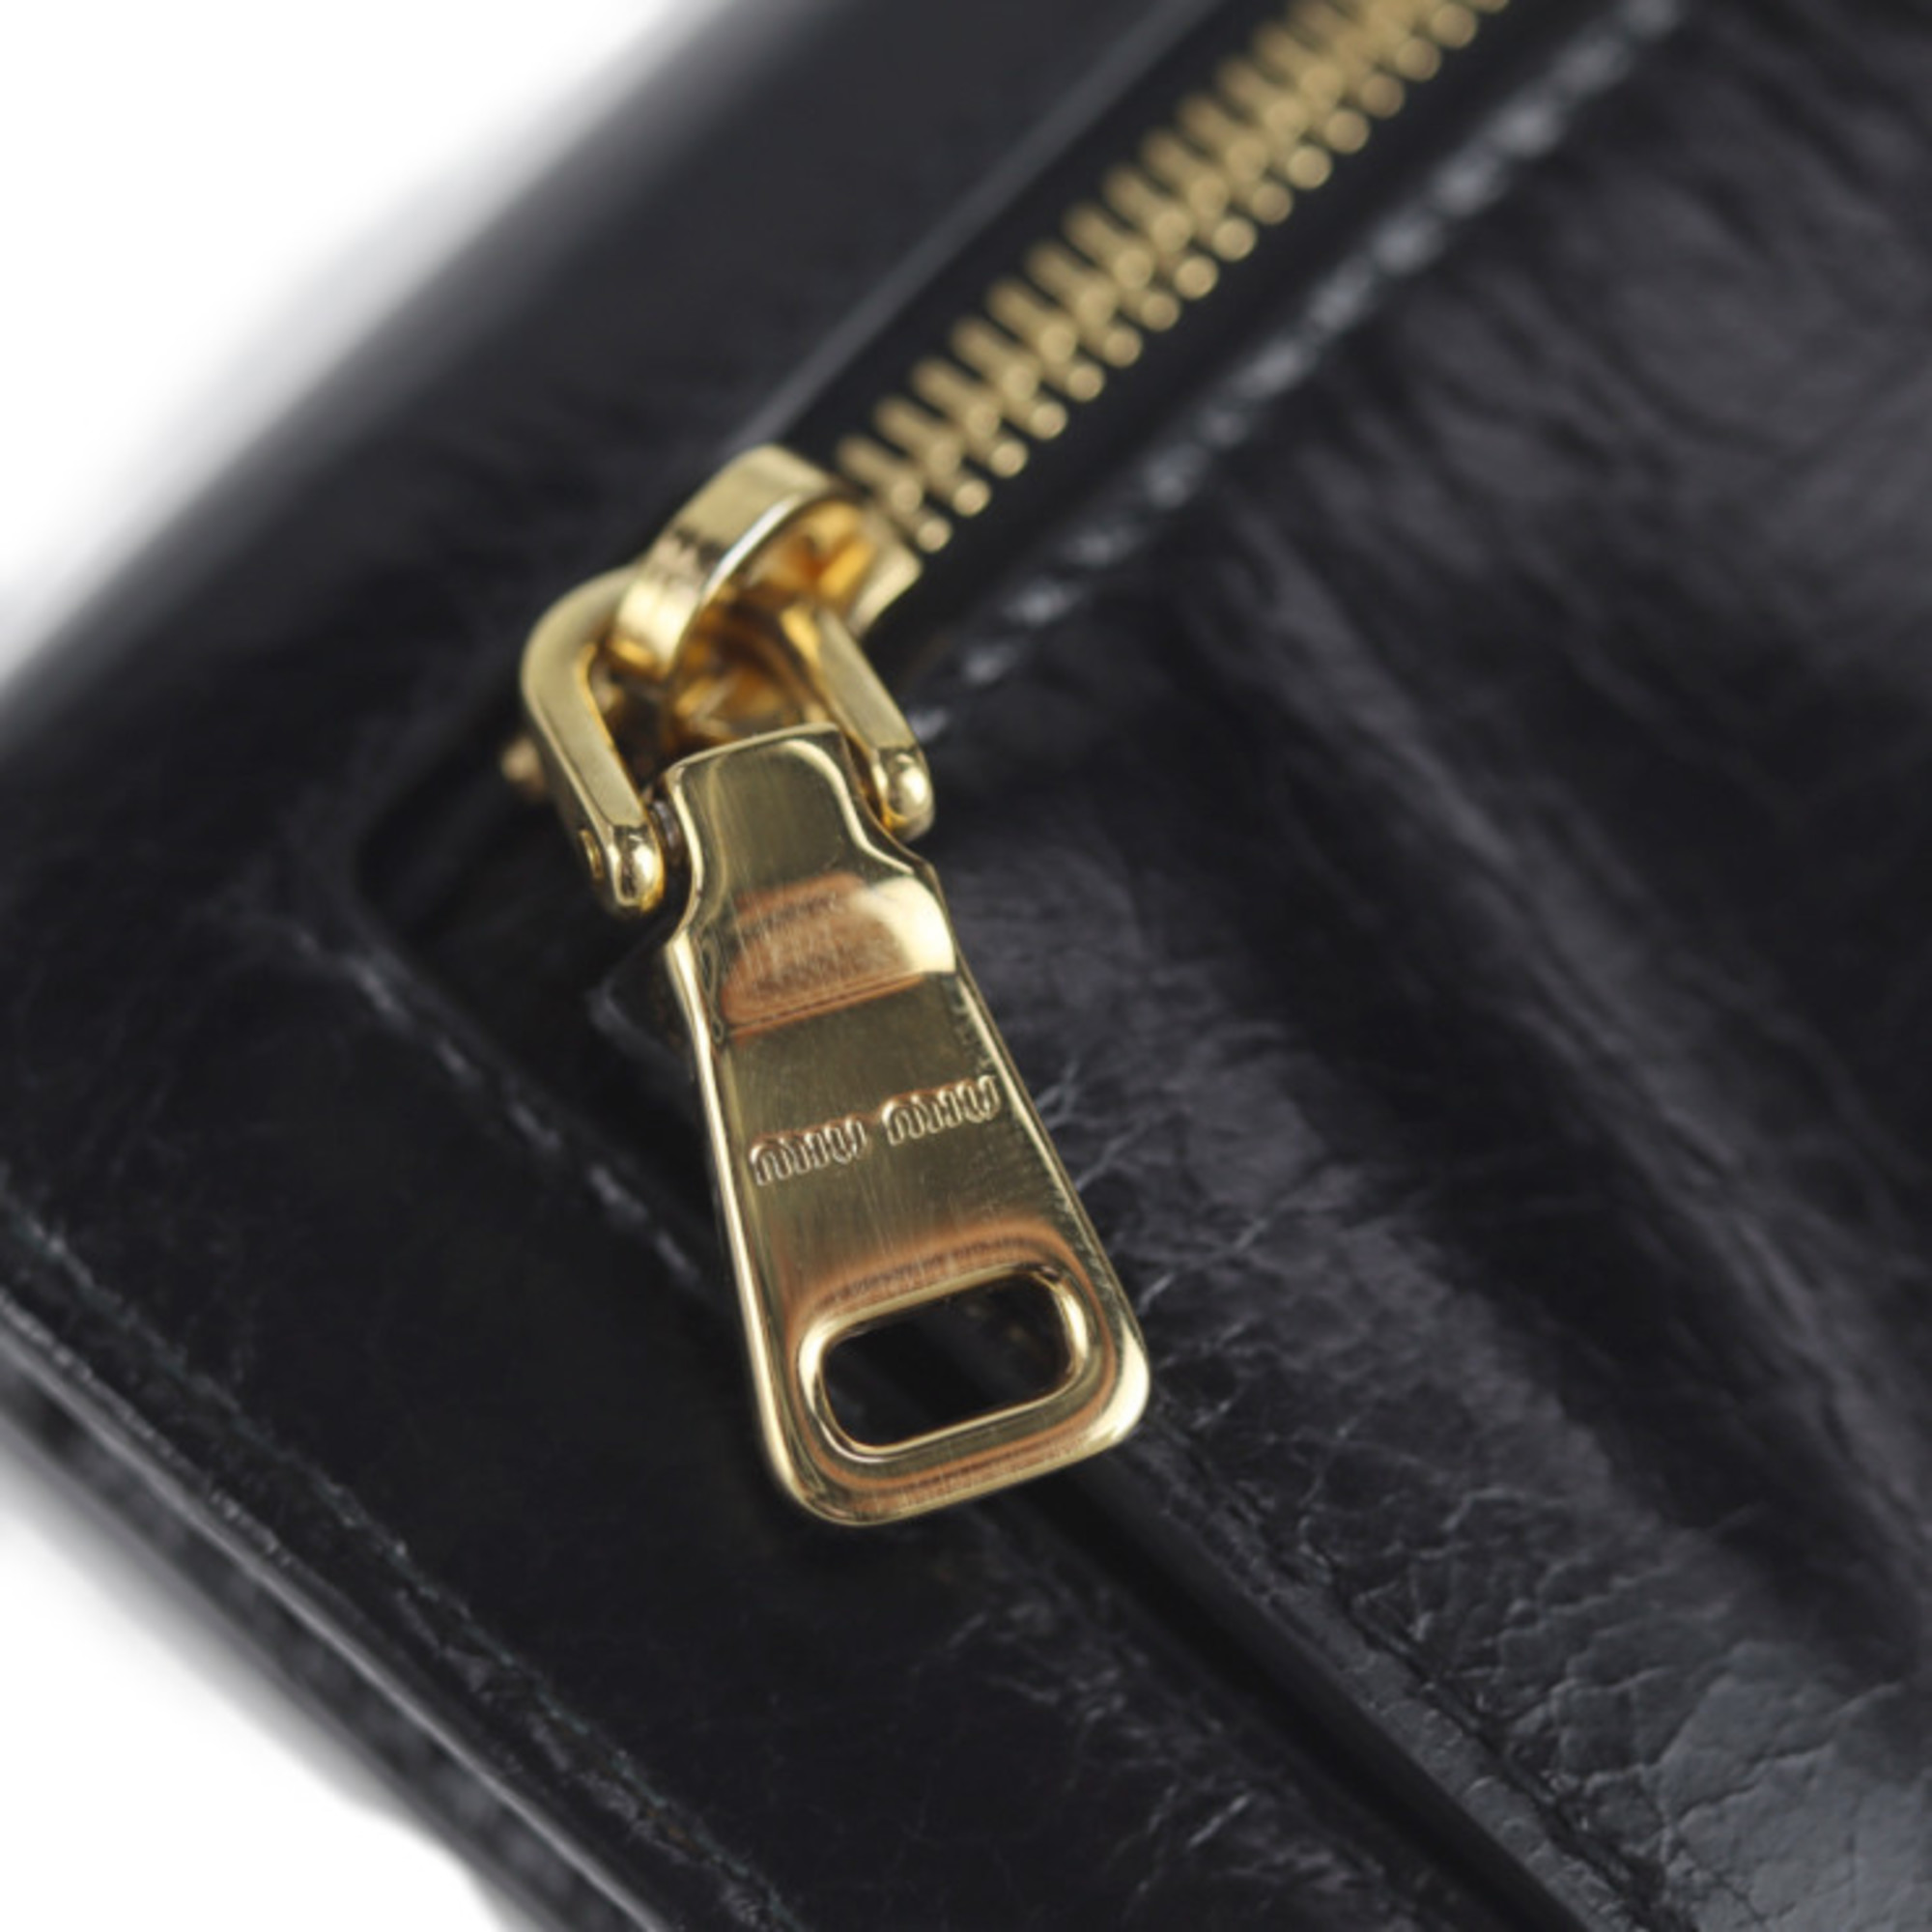 Miu Miu MIUMIU bifold wallet 5MH109 shiny calf leather antique processing NERO black long with pass case